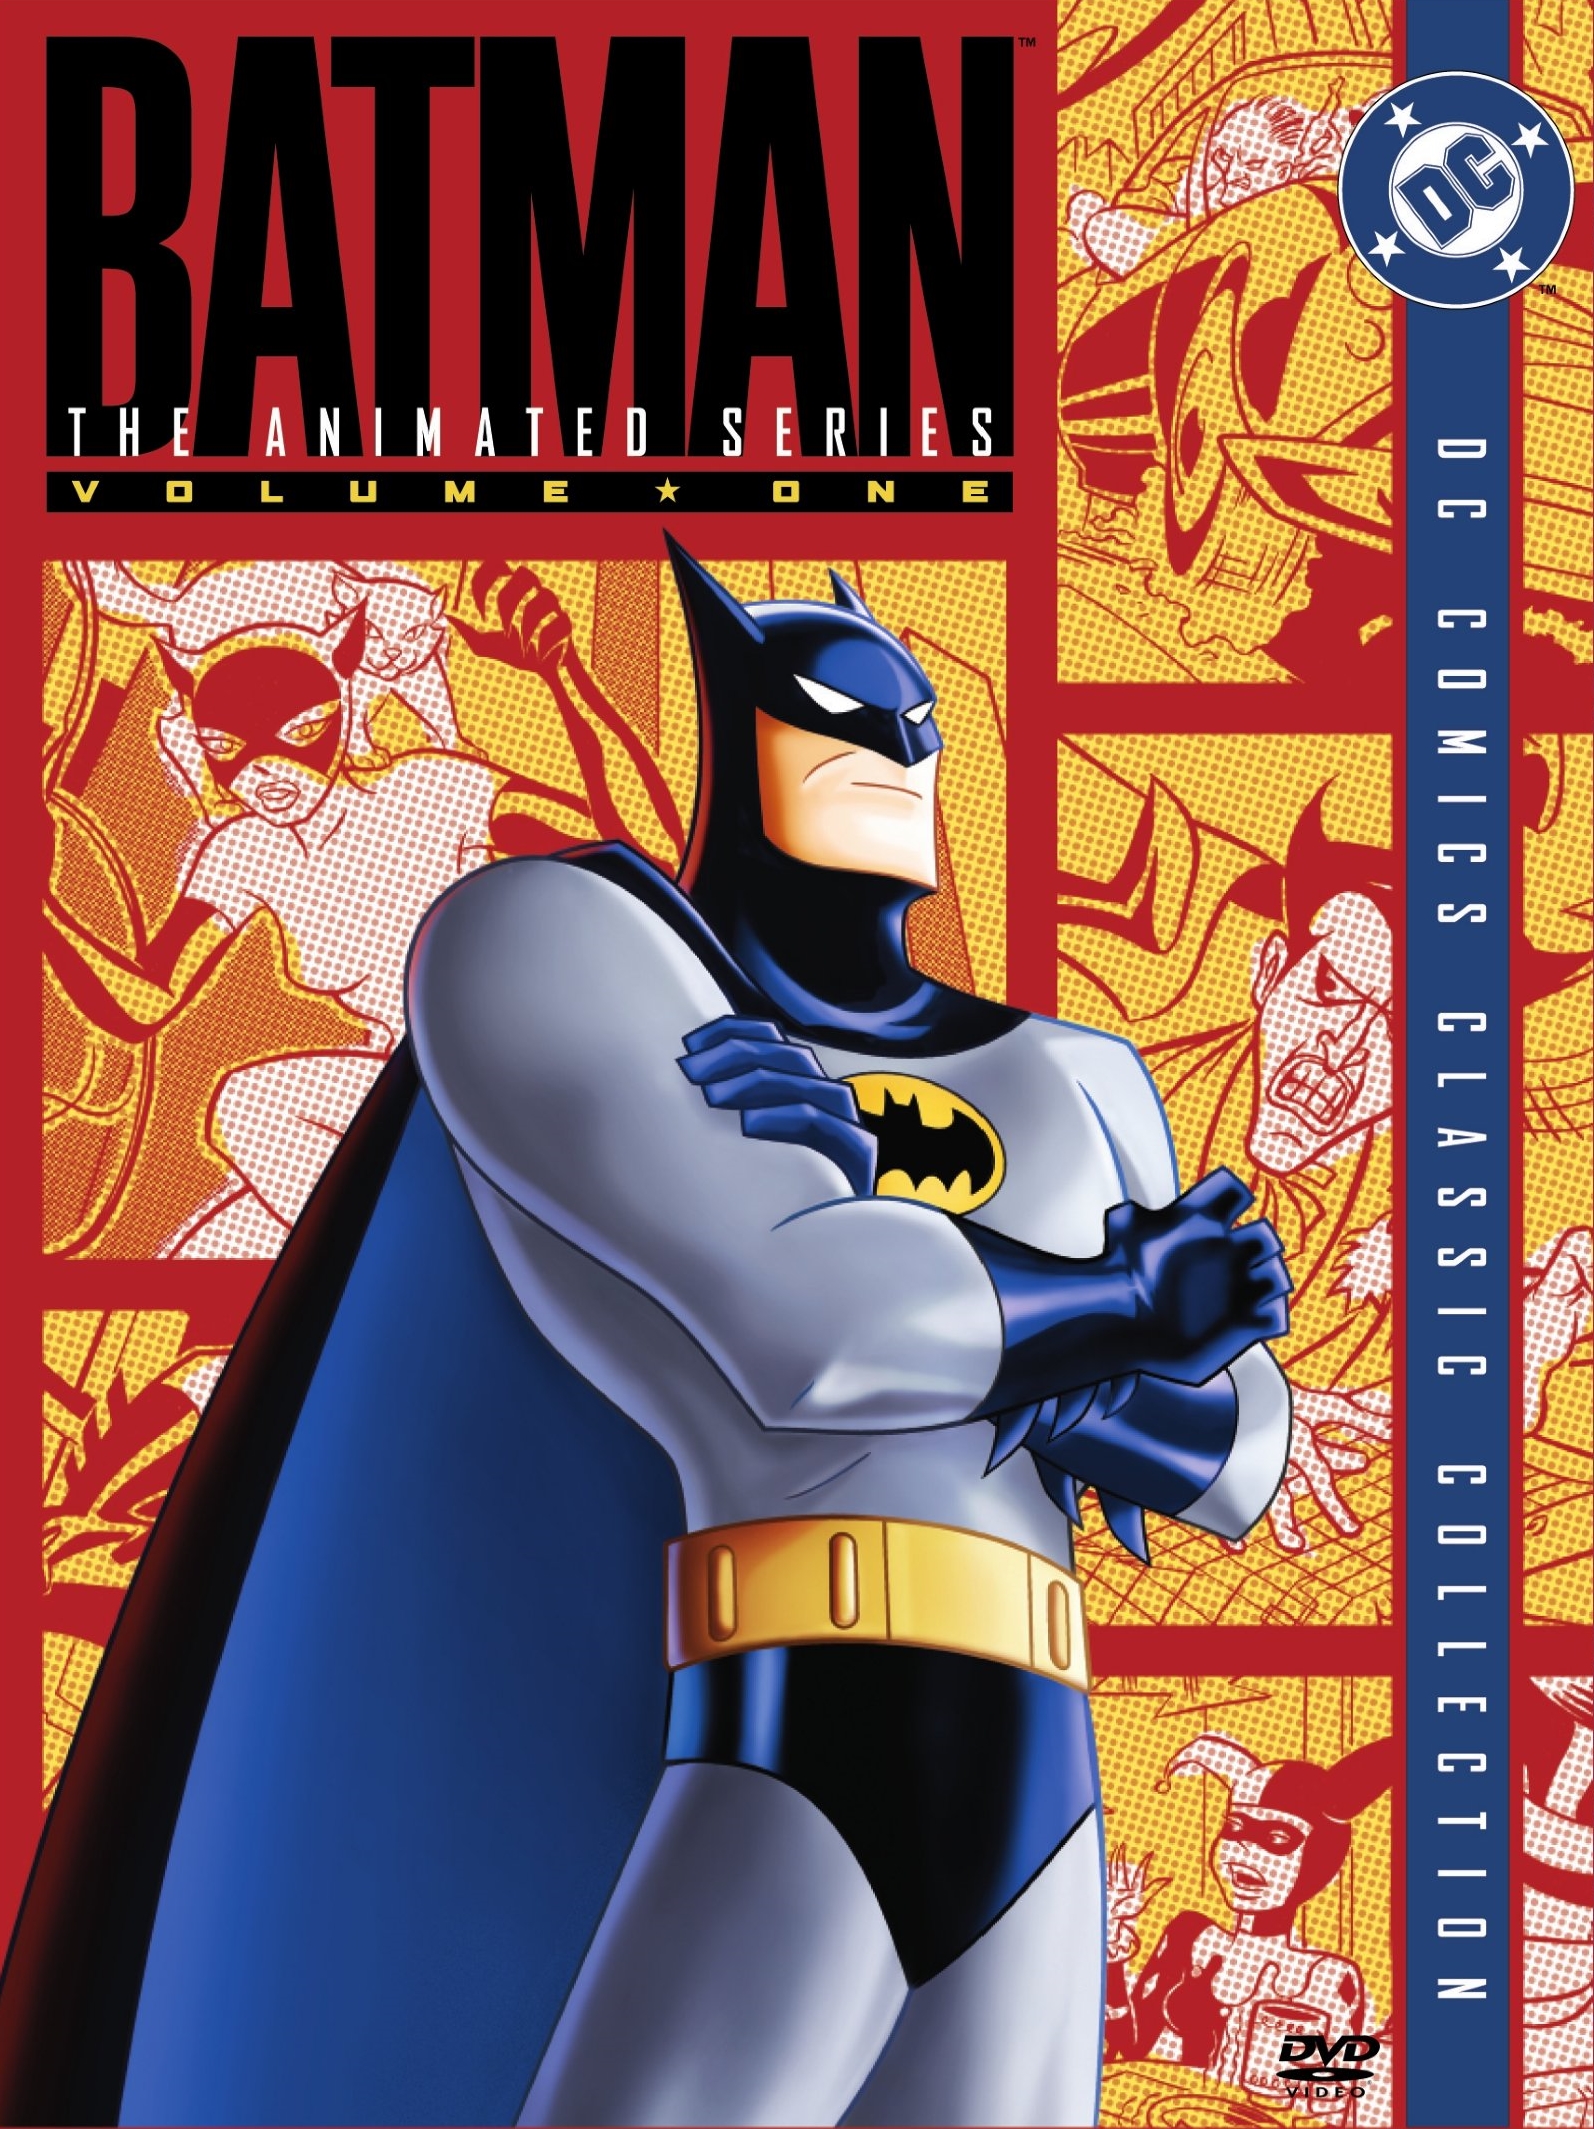 Batman: The Animated Series Vol. 1 - Best Buy